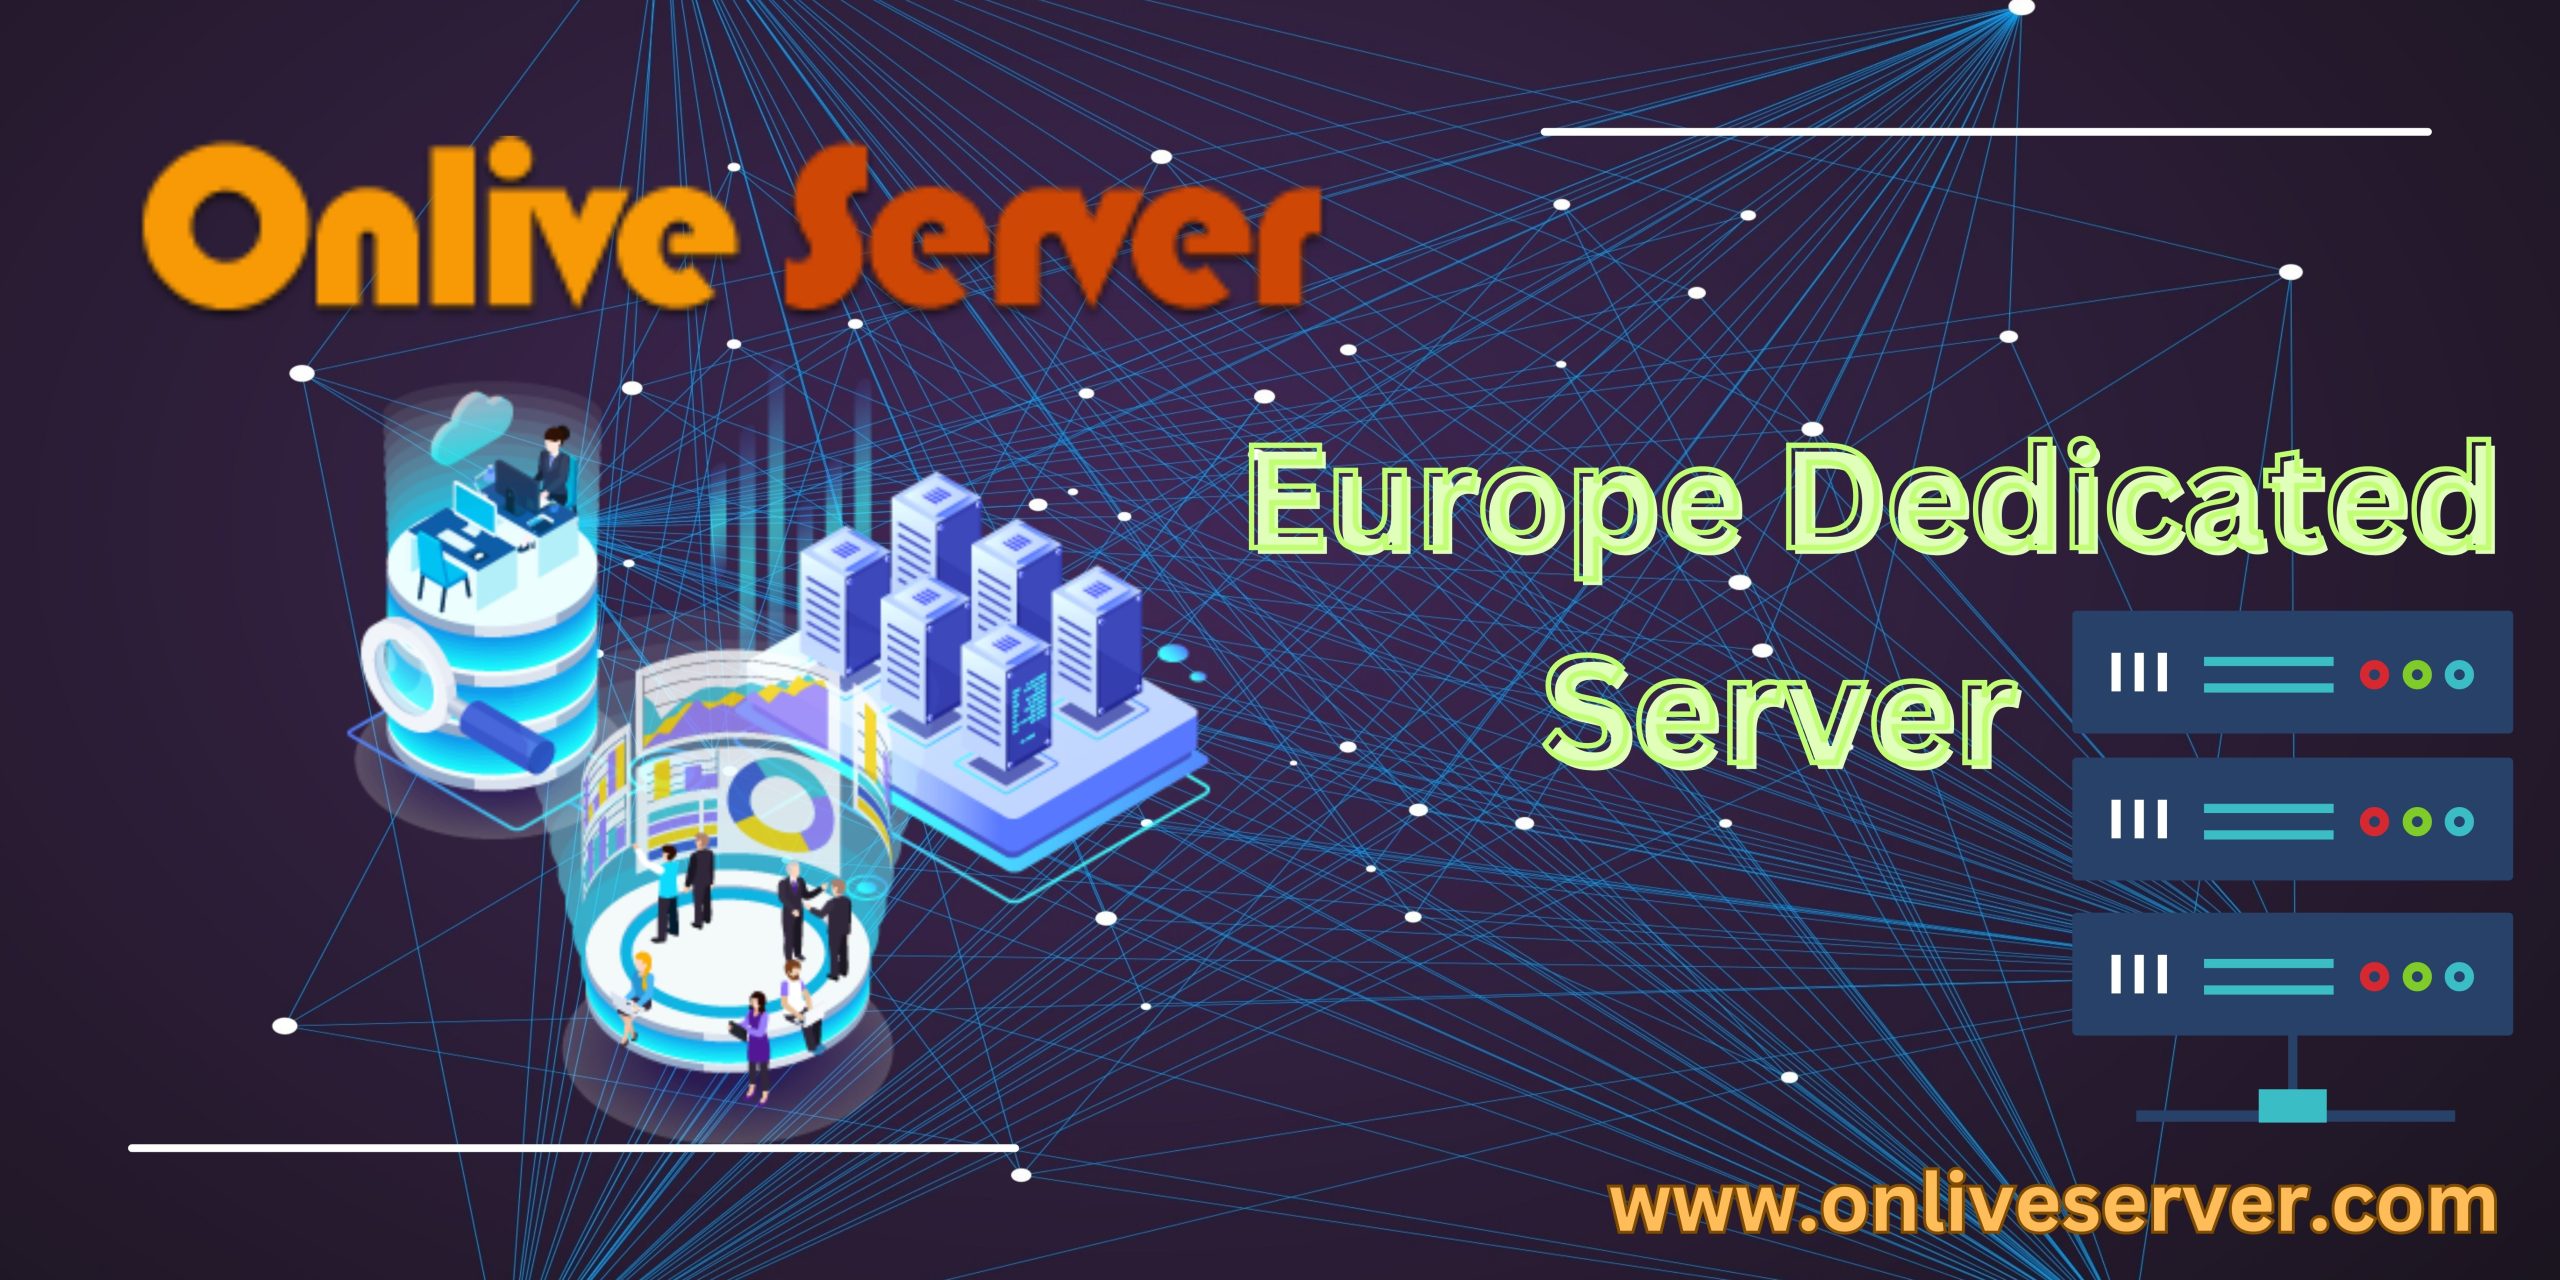 Europe Dedicated server